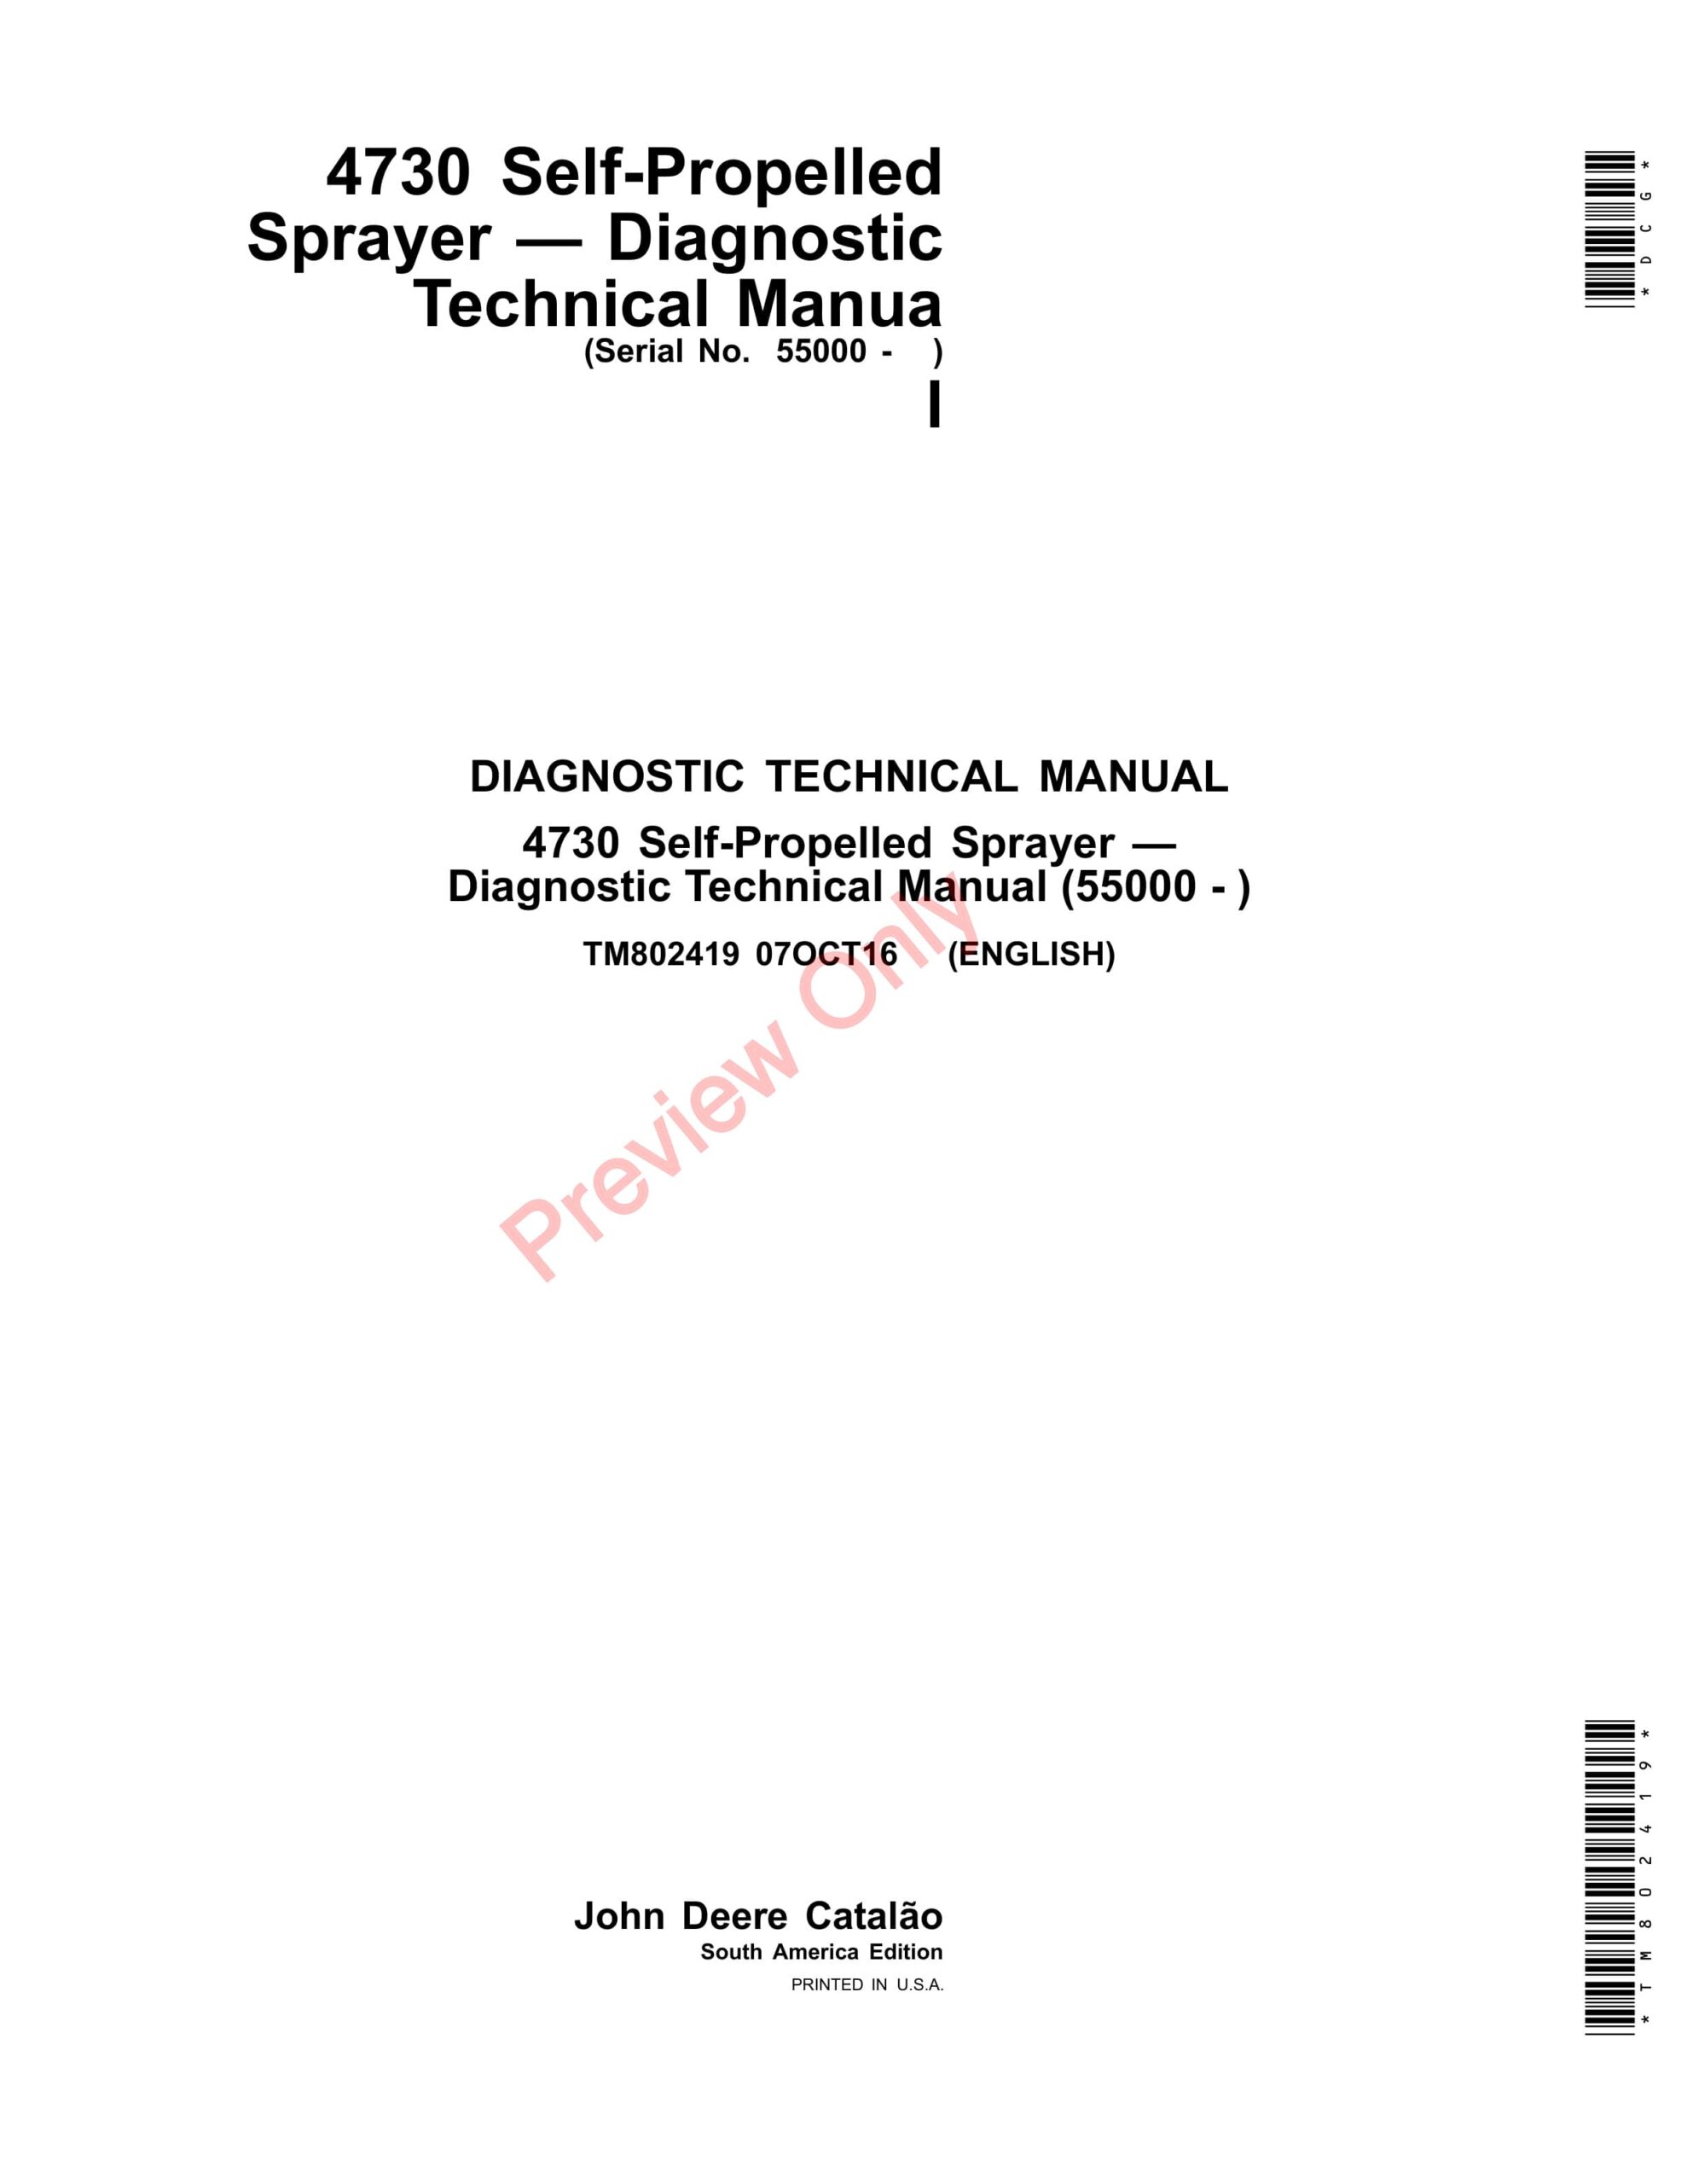 John Deere 4730 Self-Propelled Sprayer Diagnostic Technical Manual TM802419 01FEB17-1